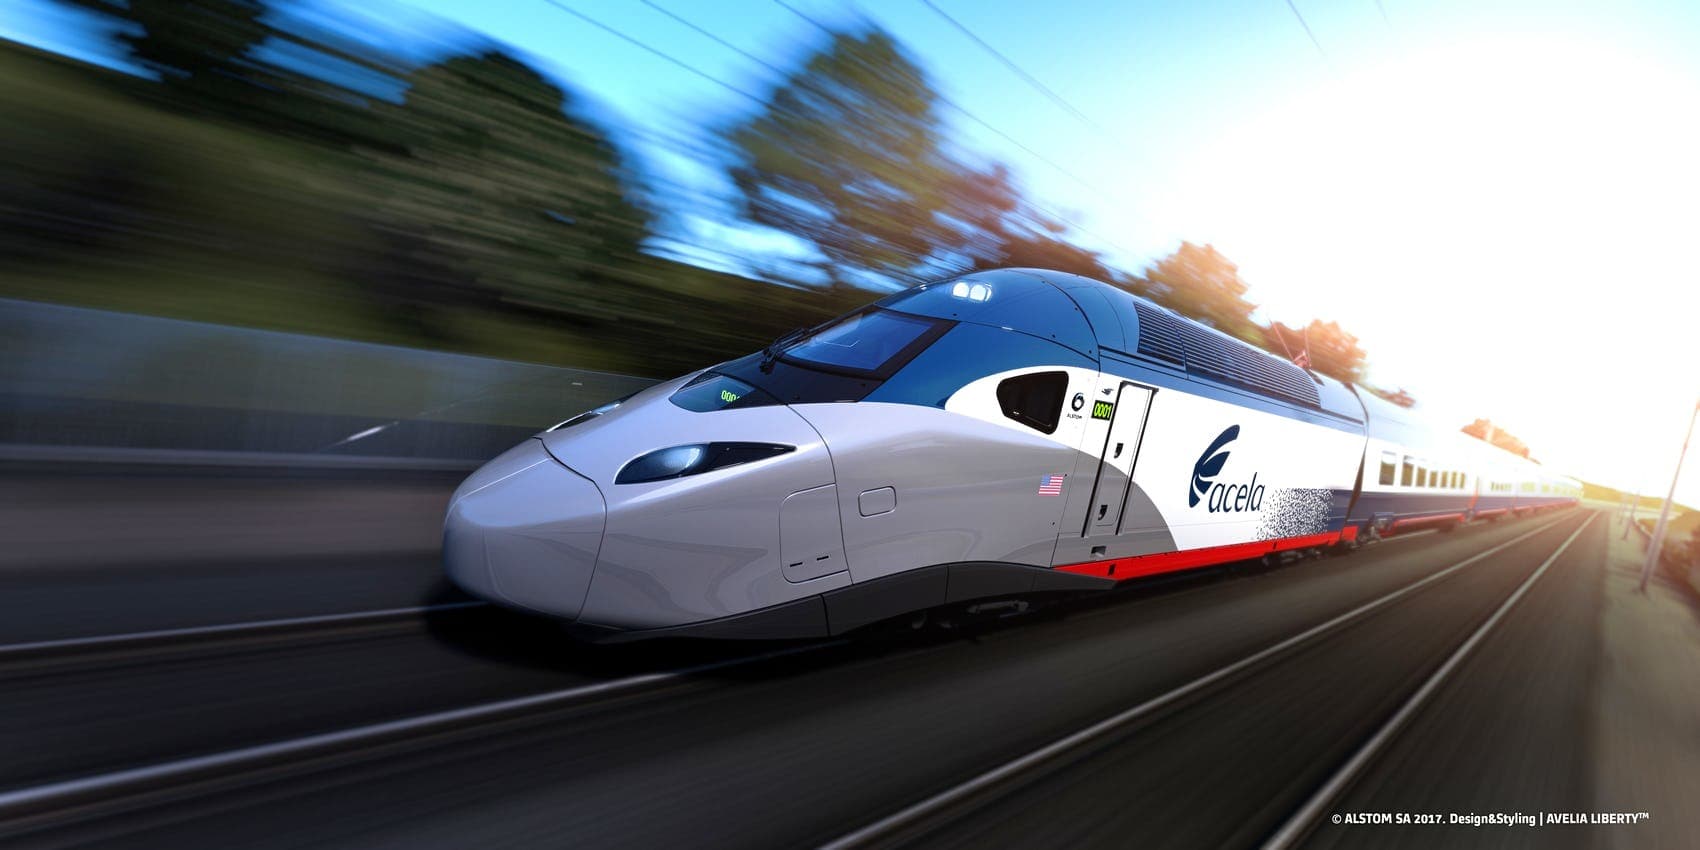 Amtrak Acela High Speed